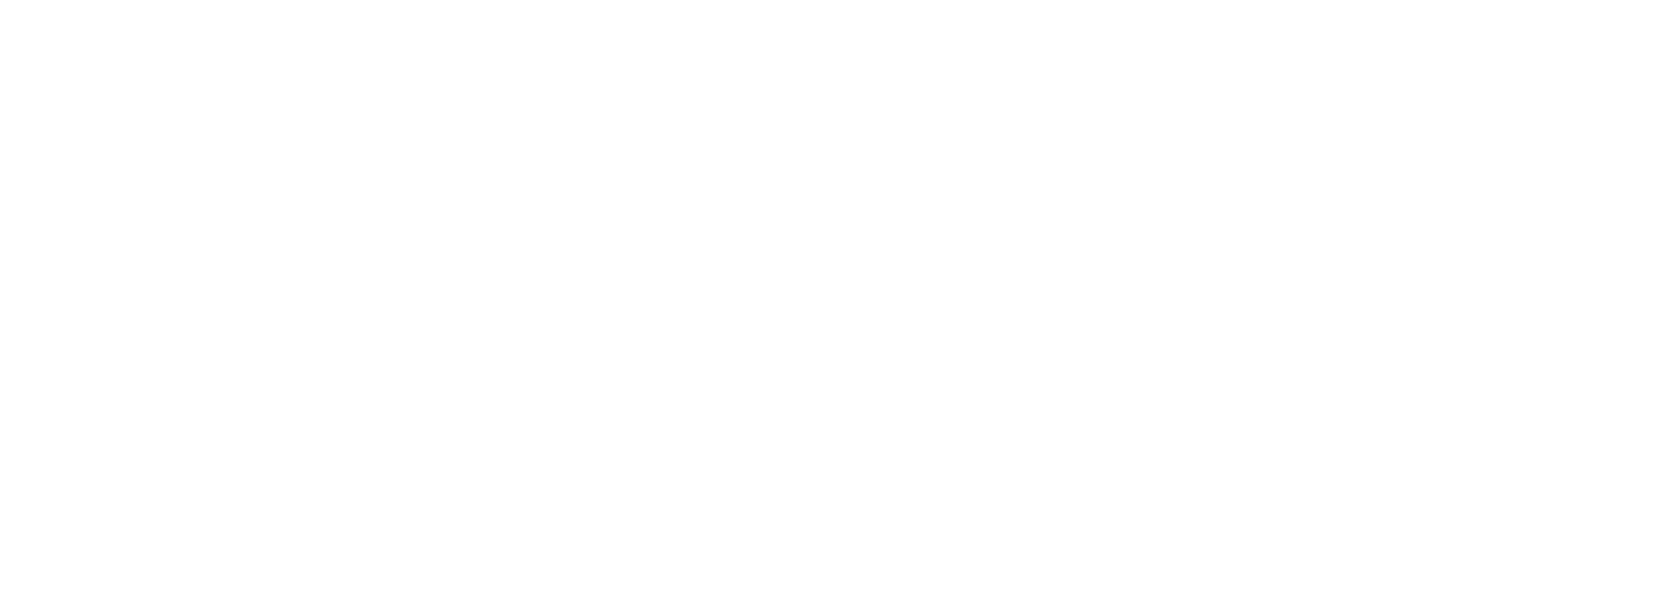 #painting #art #artworks #artistic #abstract #abstractpainting #abstractexpressionism #contemporaryart #europeanart #visualart #culture #blog #fallingskies #olegagafonov #pastel #charcoal #texture #skyline #sunshine #moon #sky #space #stars #rays_of_light #deep_space #dark #night_sky #starship #galaxy #golden @elloabstract @ellotextures @ellopainting @elloart